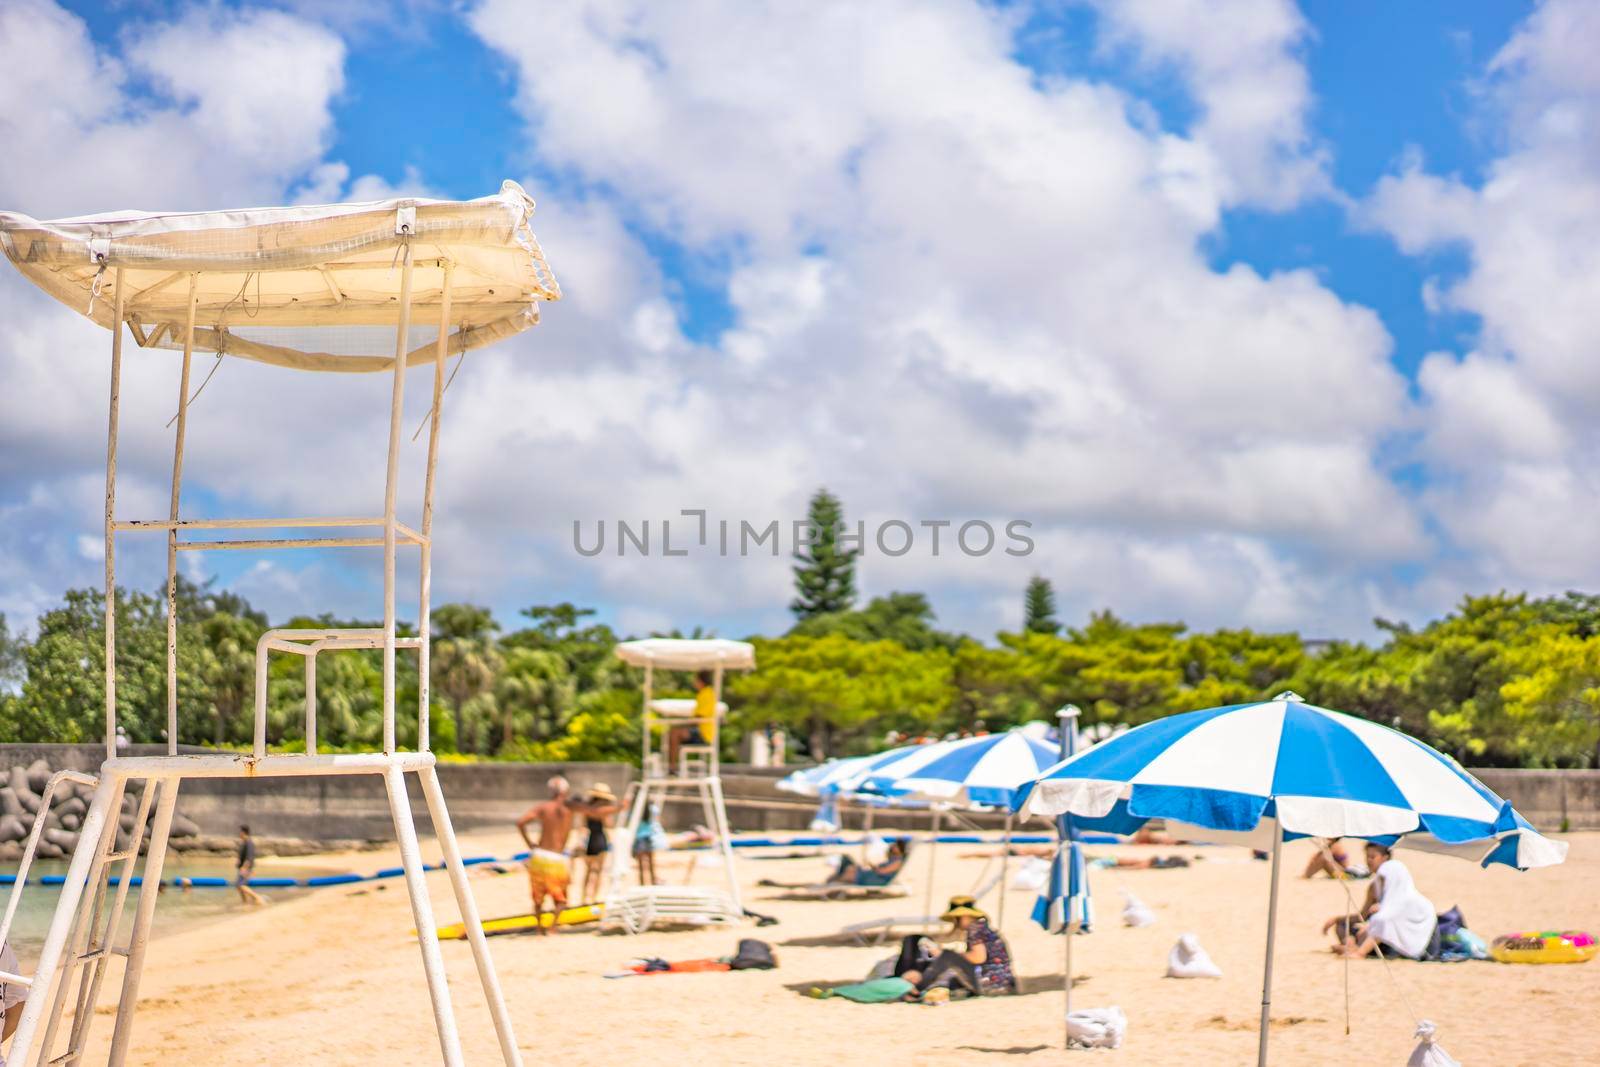 Beach umbrellas and Lifeguard chairs on Naminoue beach in Okinawa. by kuremo